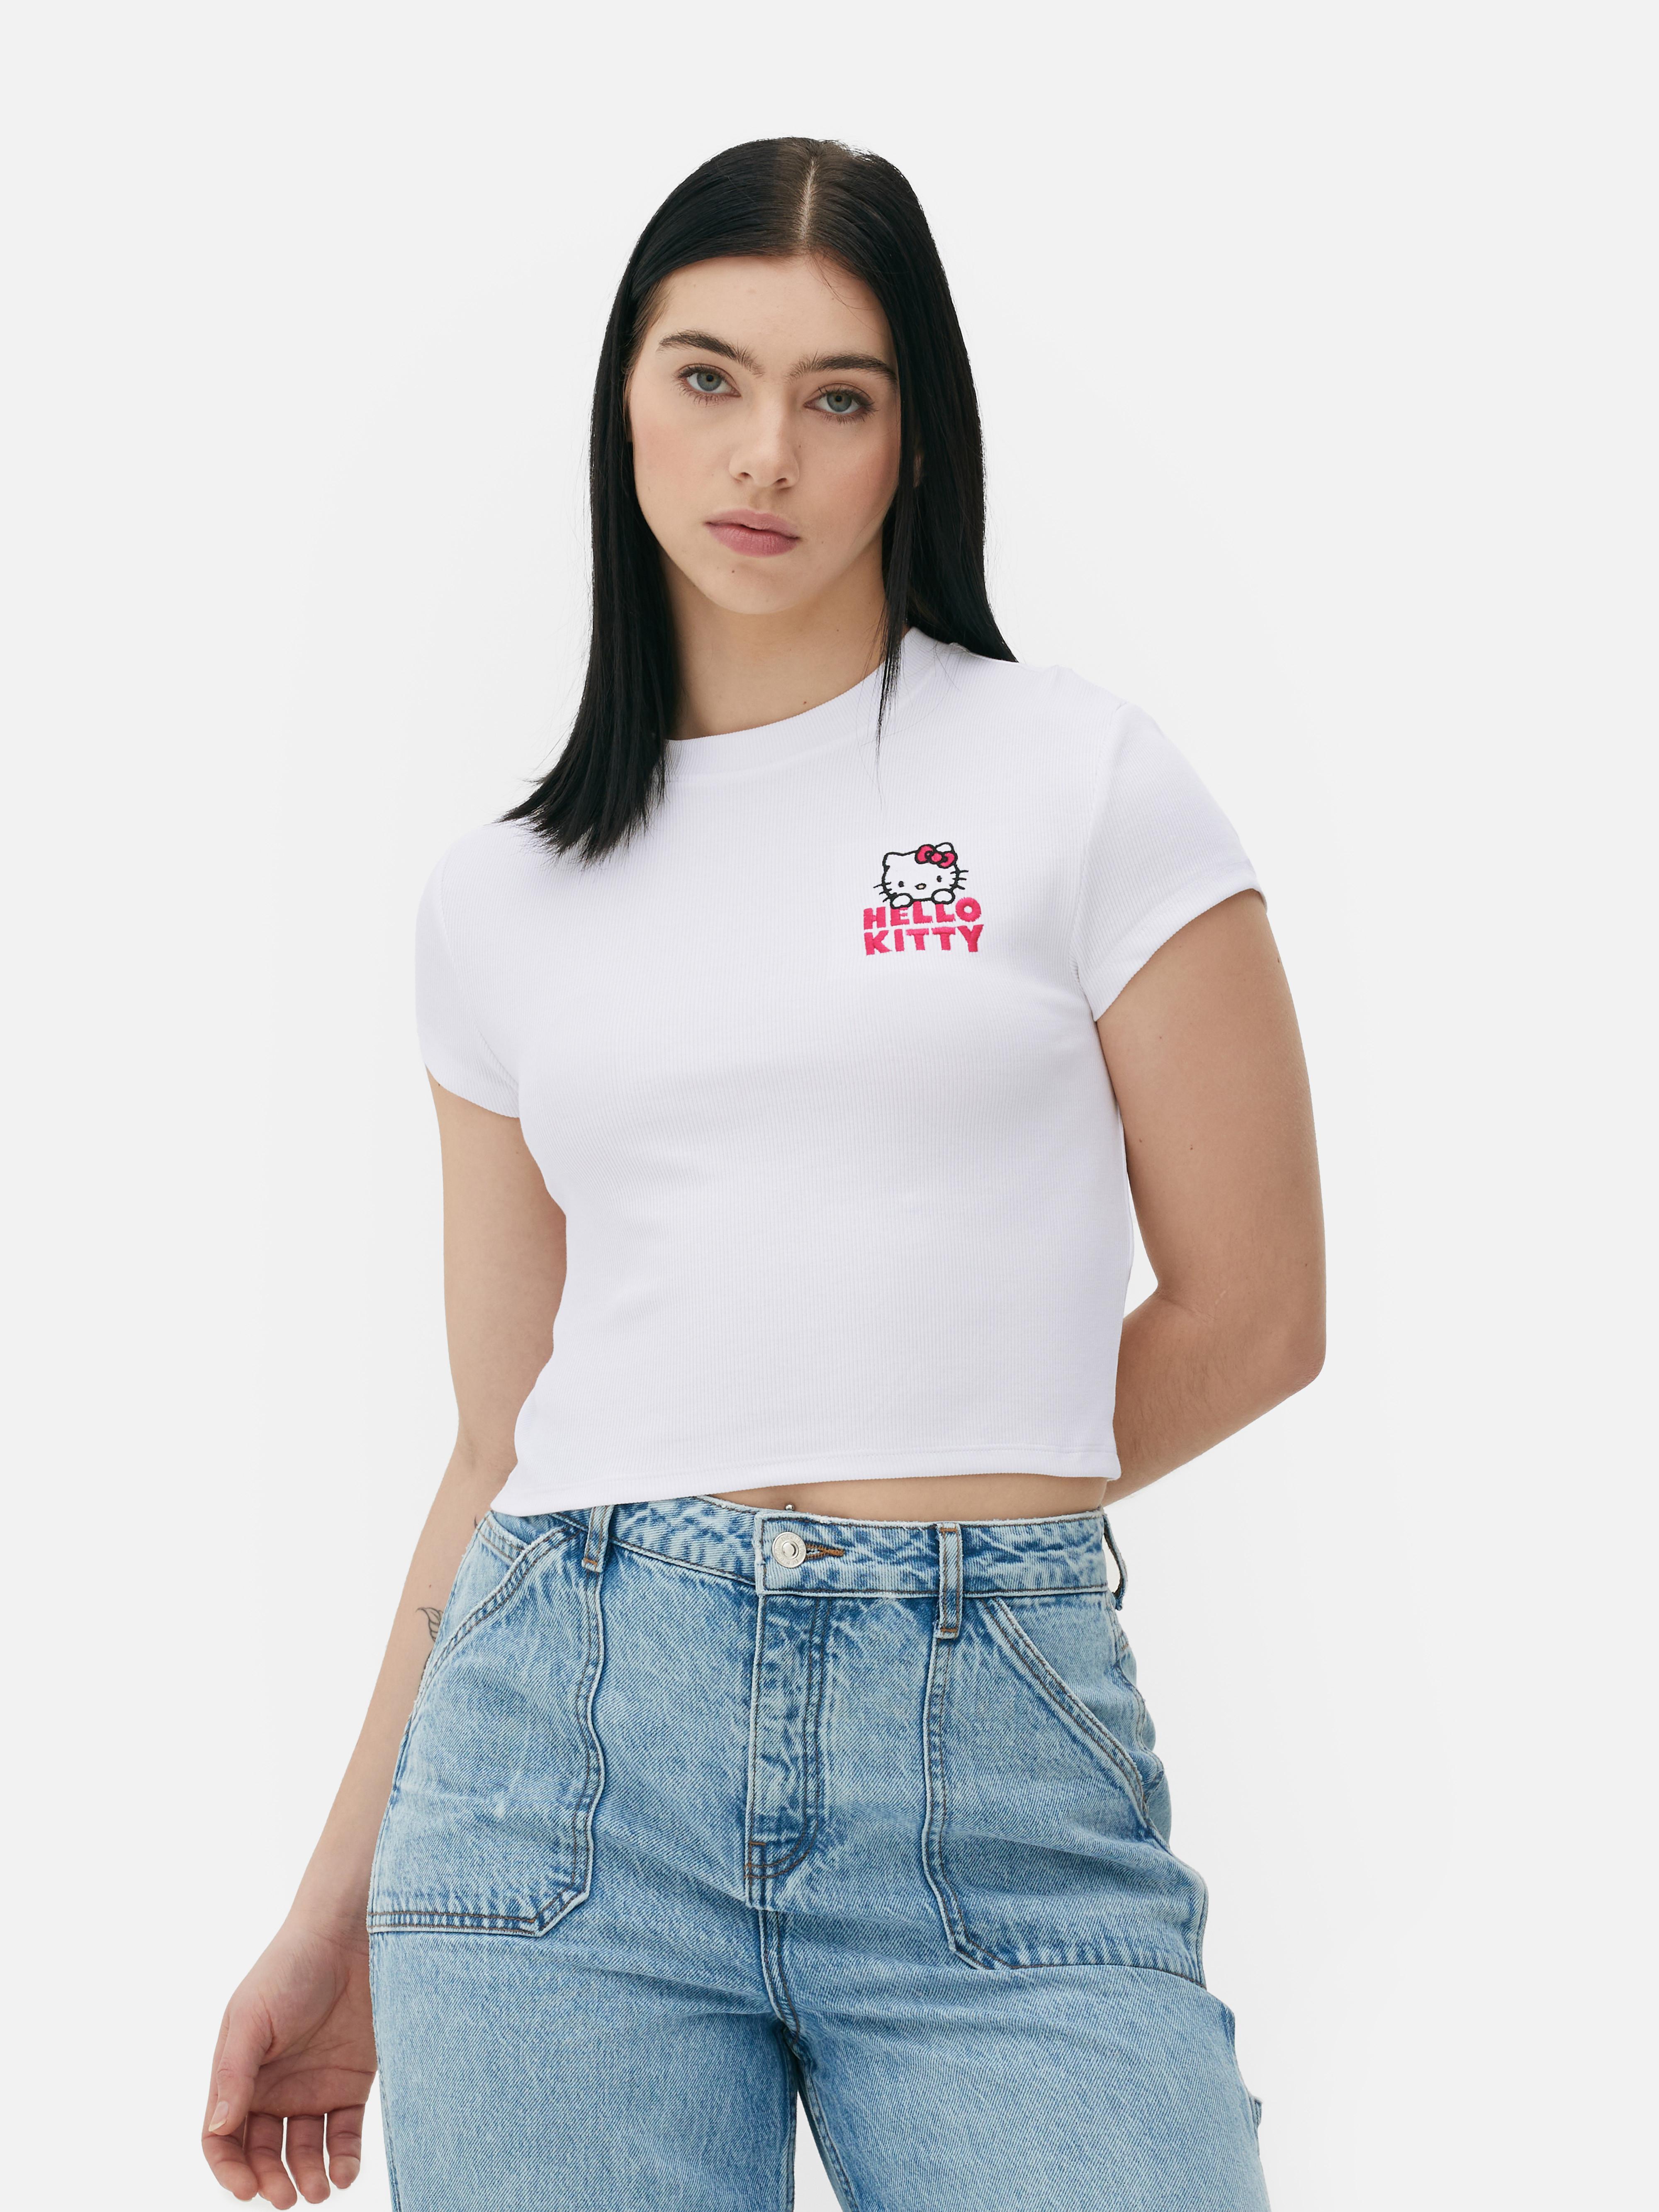 Women's Tops & T-Shirts, Long Sleeve Tops & Short Sleeve T-Shirts